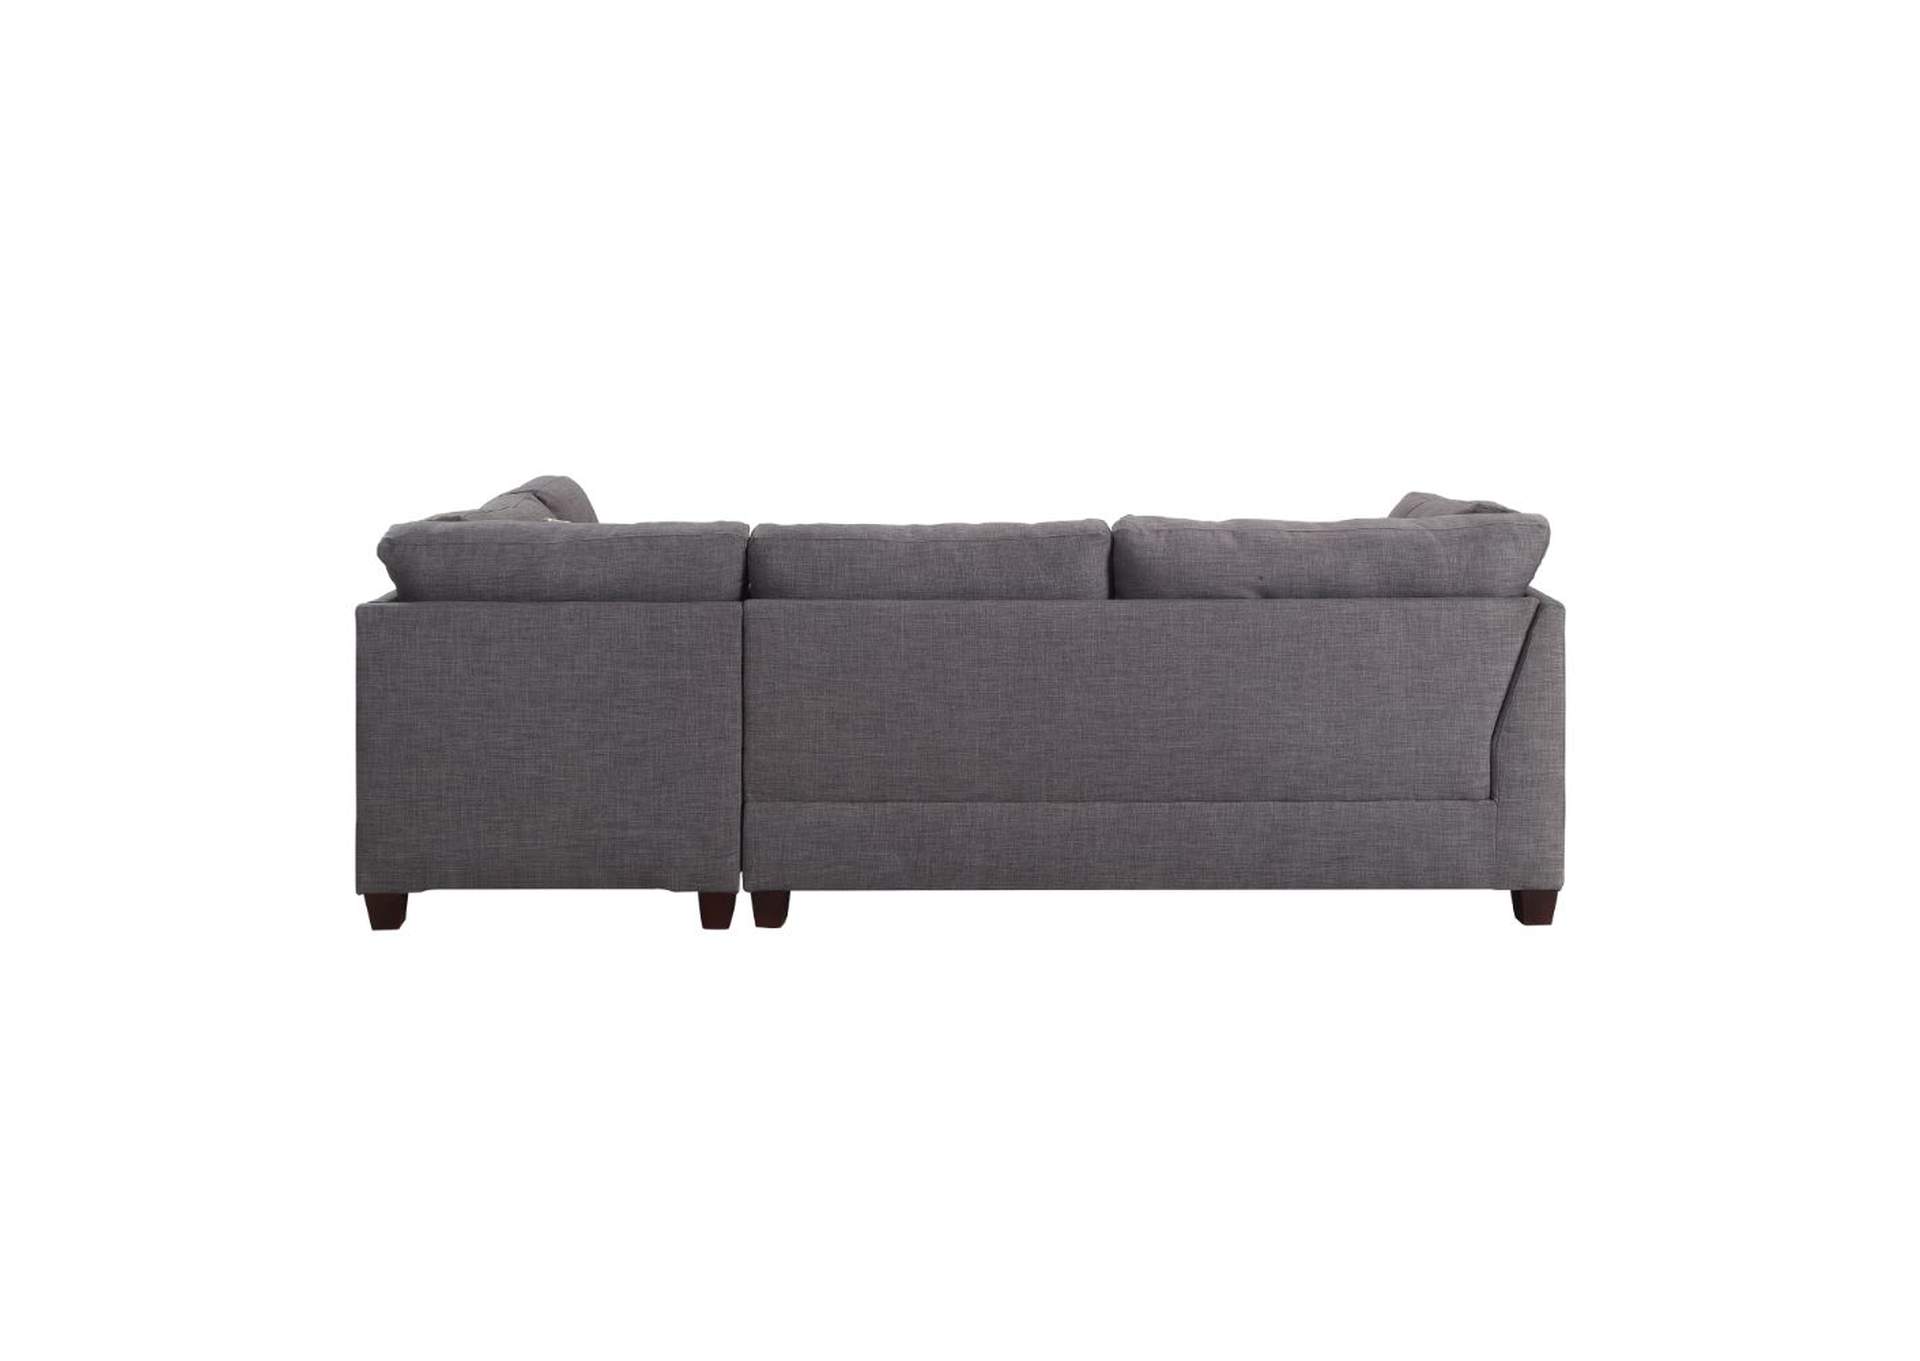 Laurissa Sectional sofa,Acme